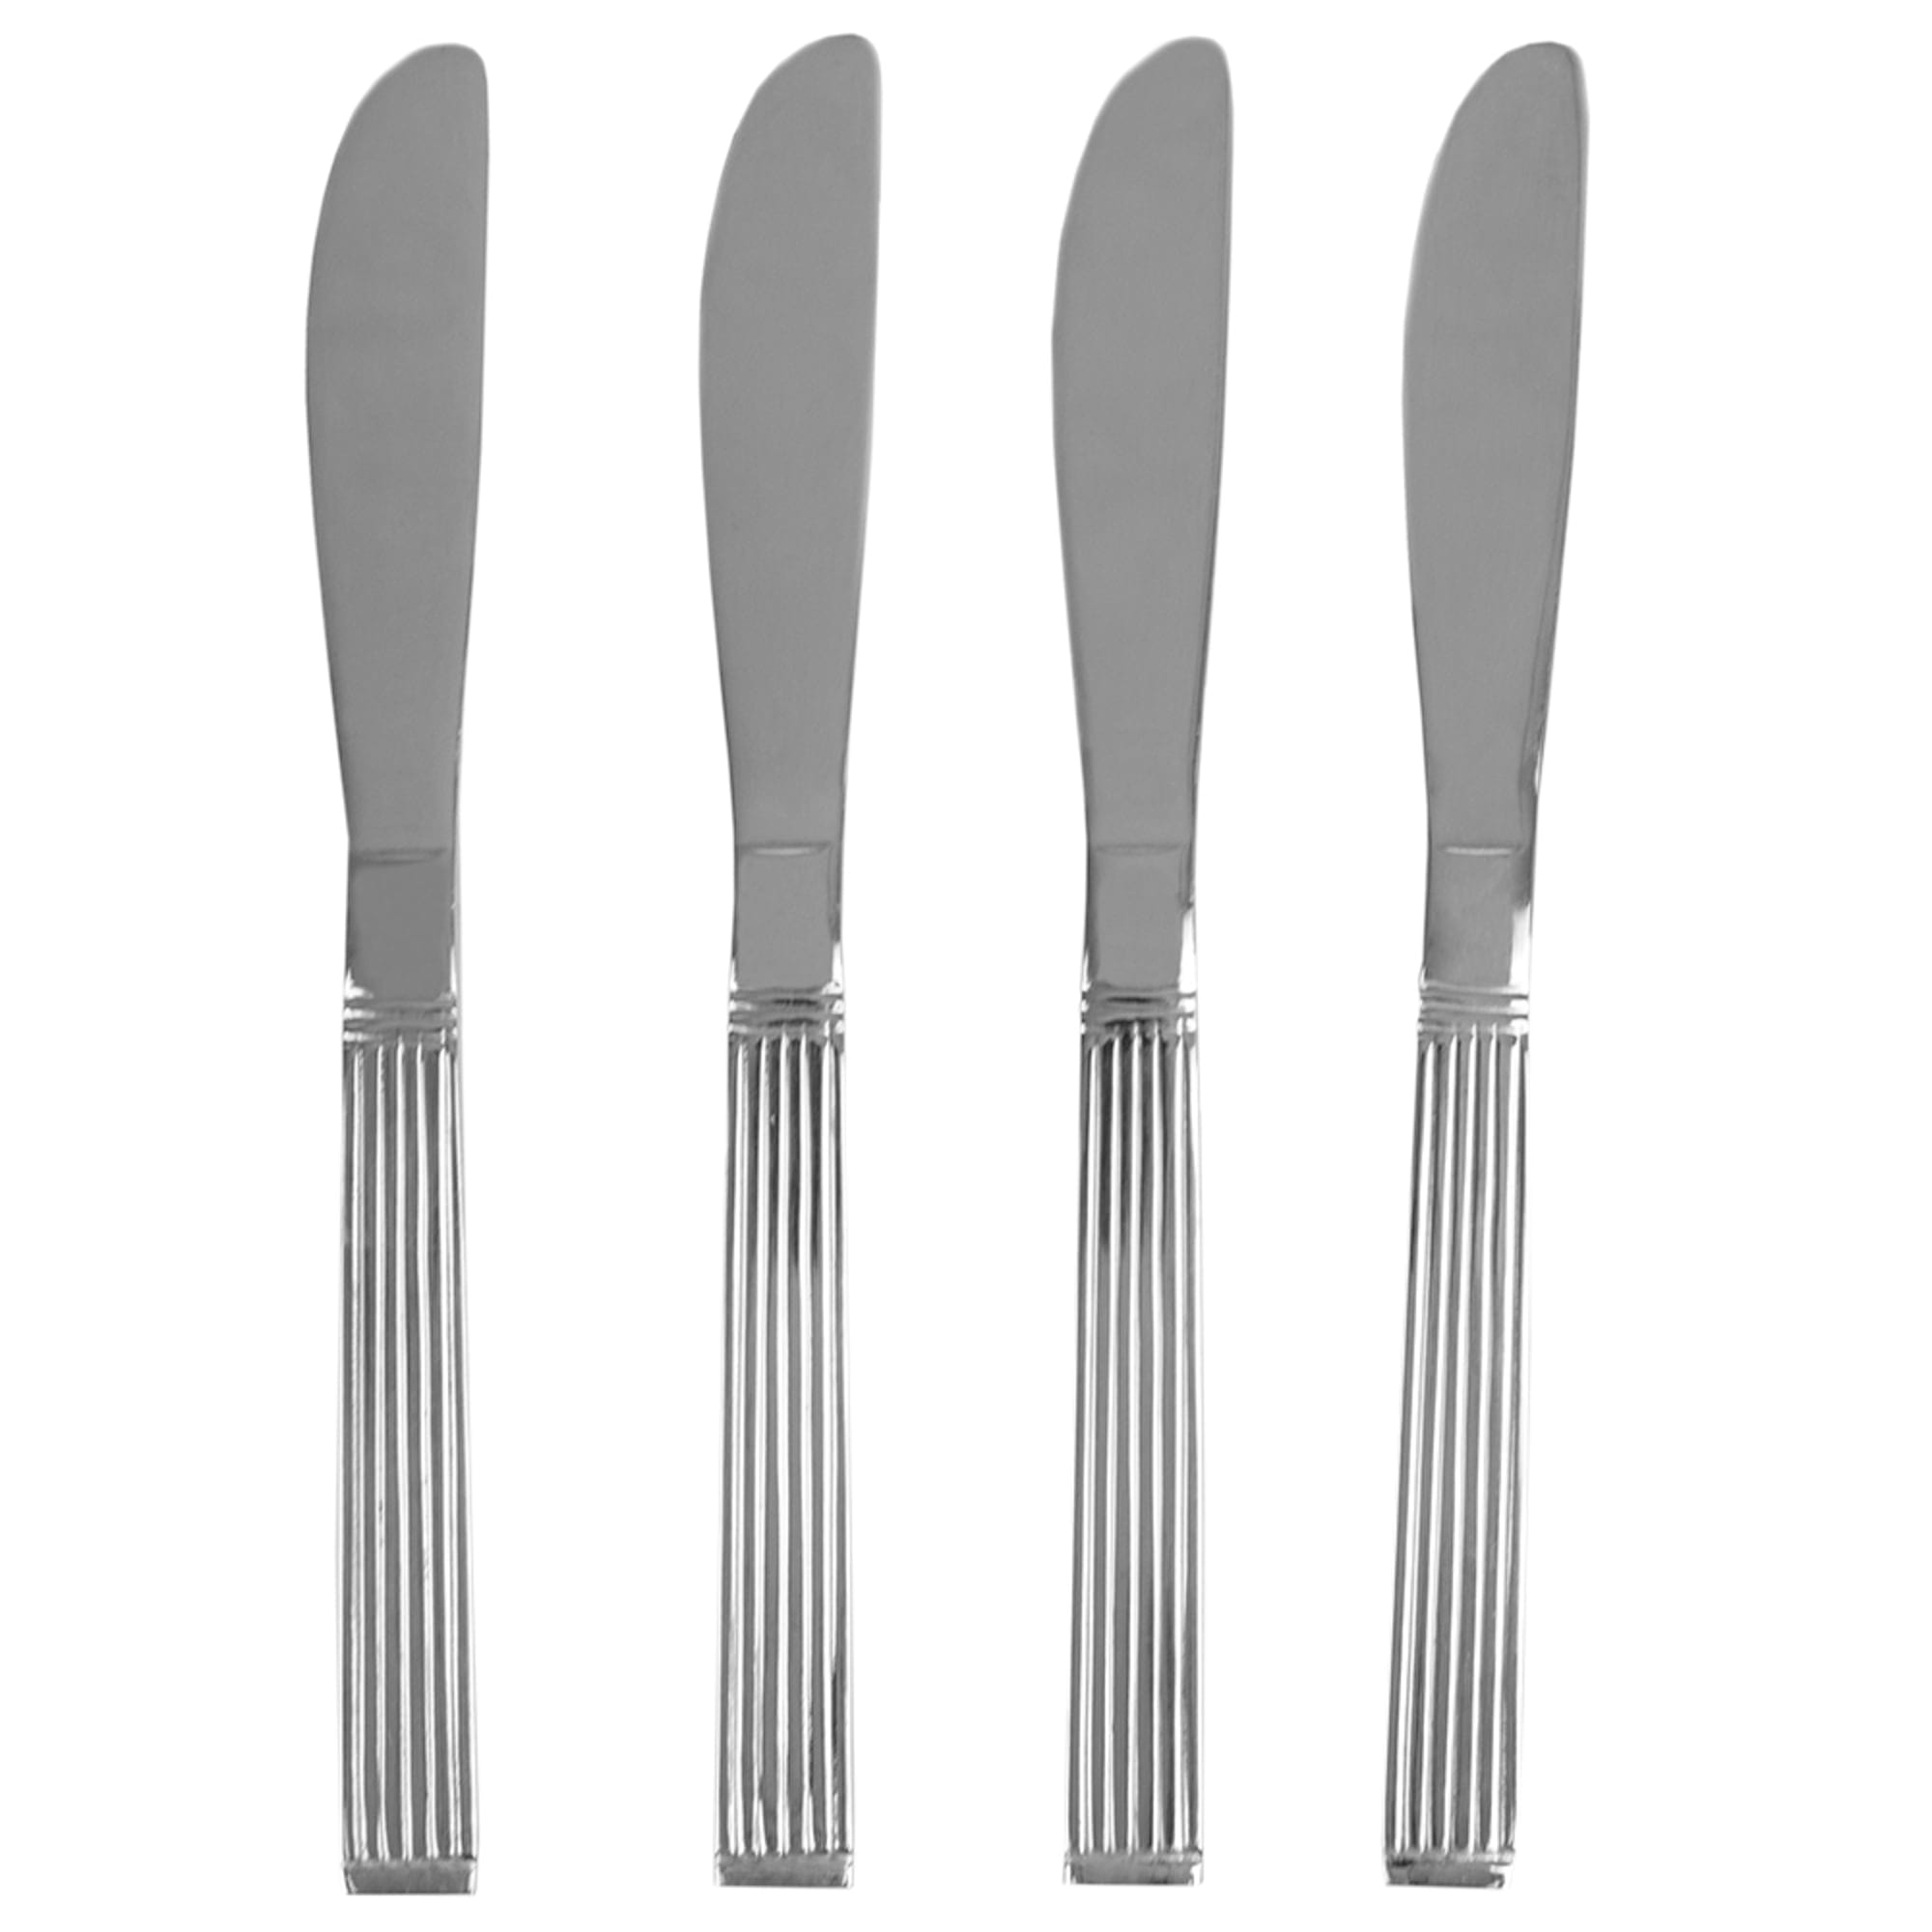 Silver 4-Piece Dinner Knife Set - Mirror Finish Stainless Steel Flatware Dinner Utensils, Essential Kitchen Cutlery Set, Dishwasher Safe $2.00 EACH, CASE PACK OF 24